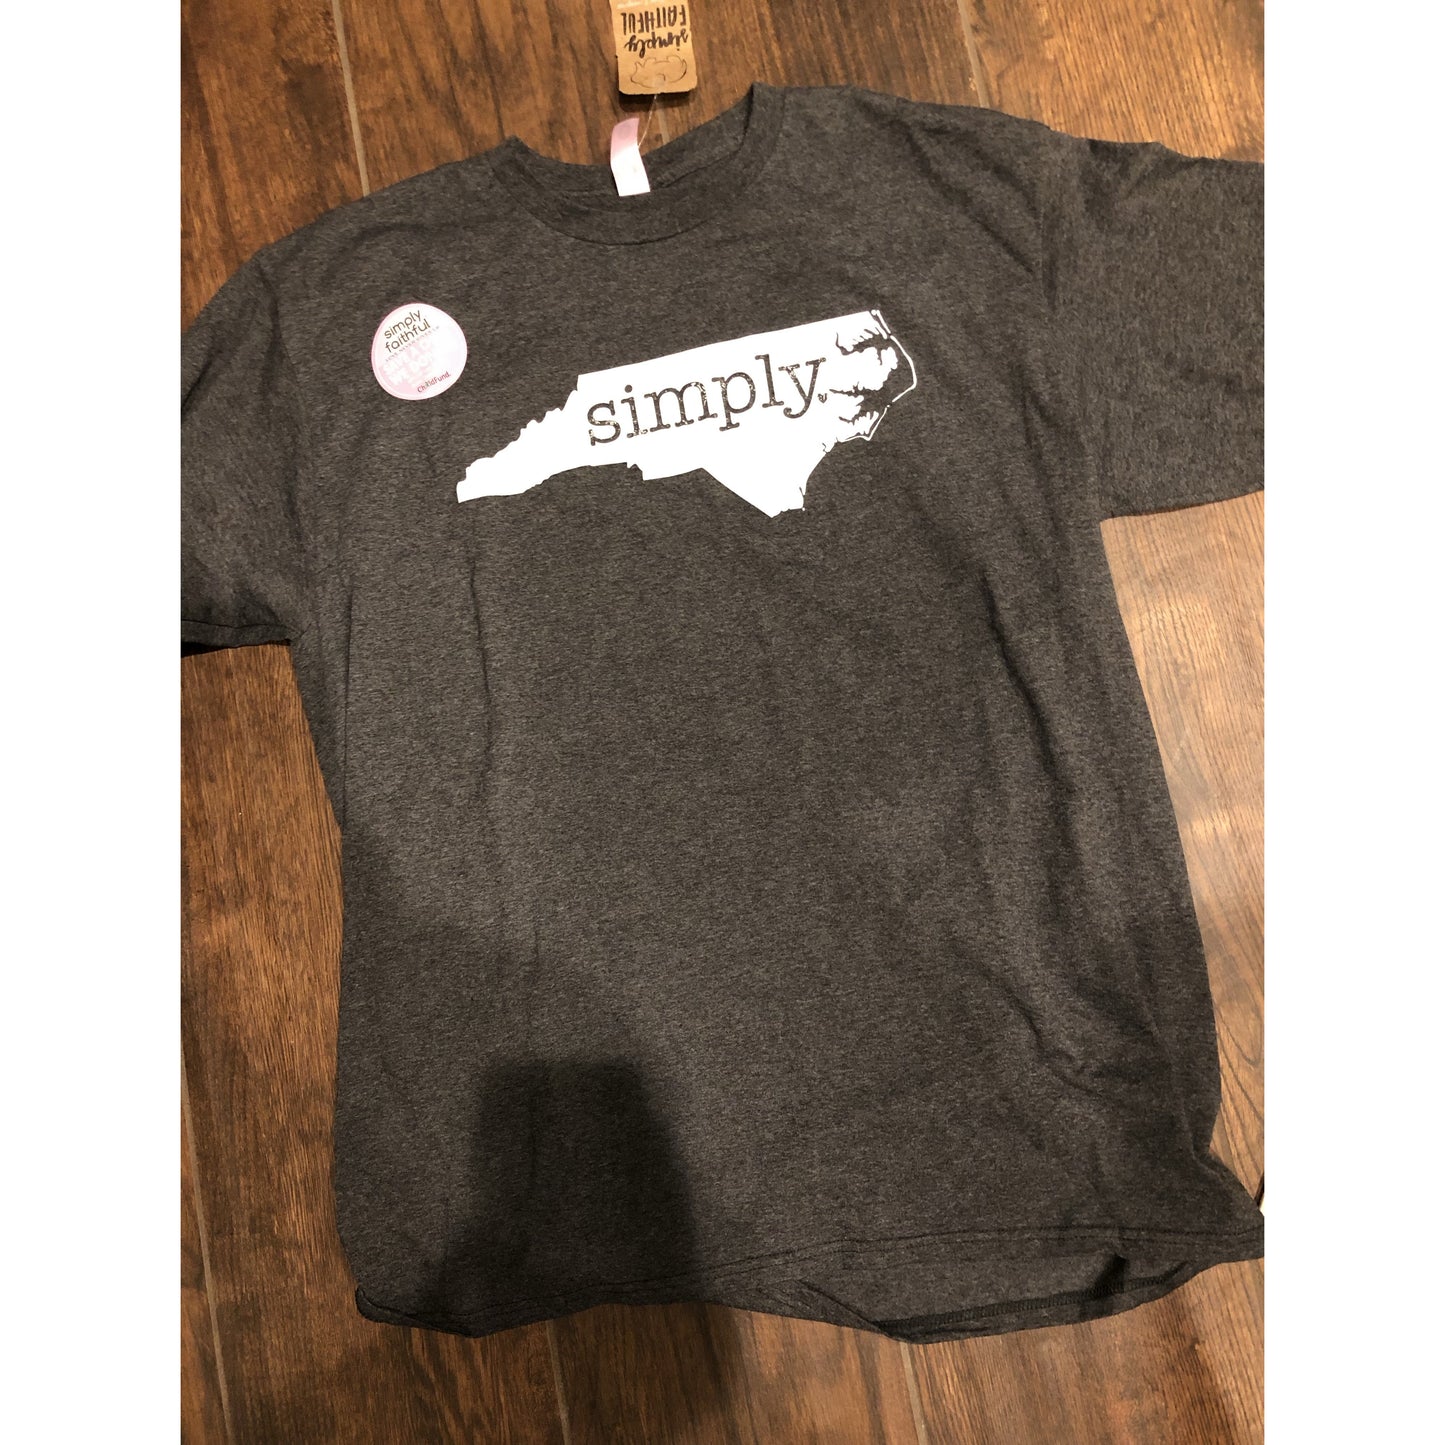 Simply Faithful NC shirt - Large